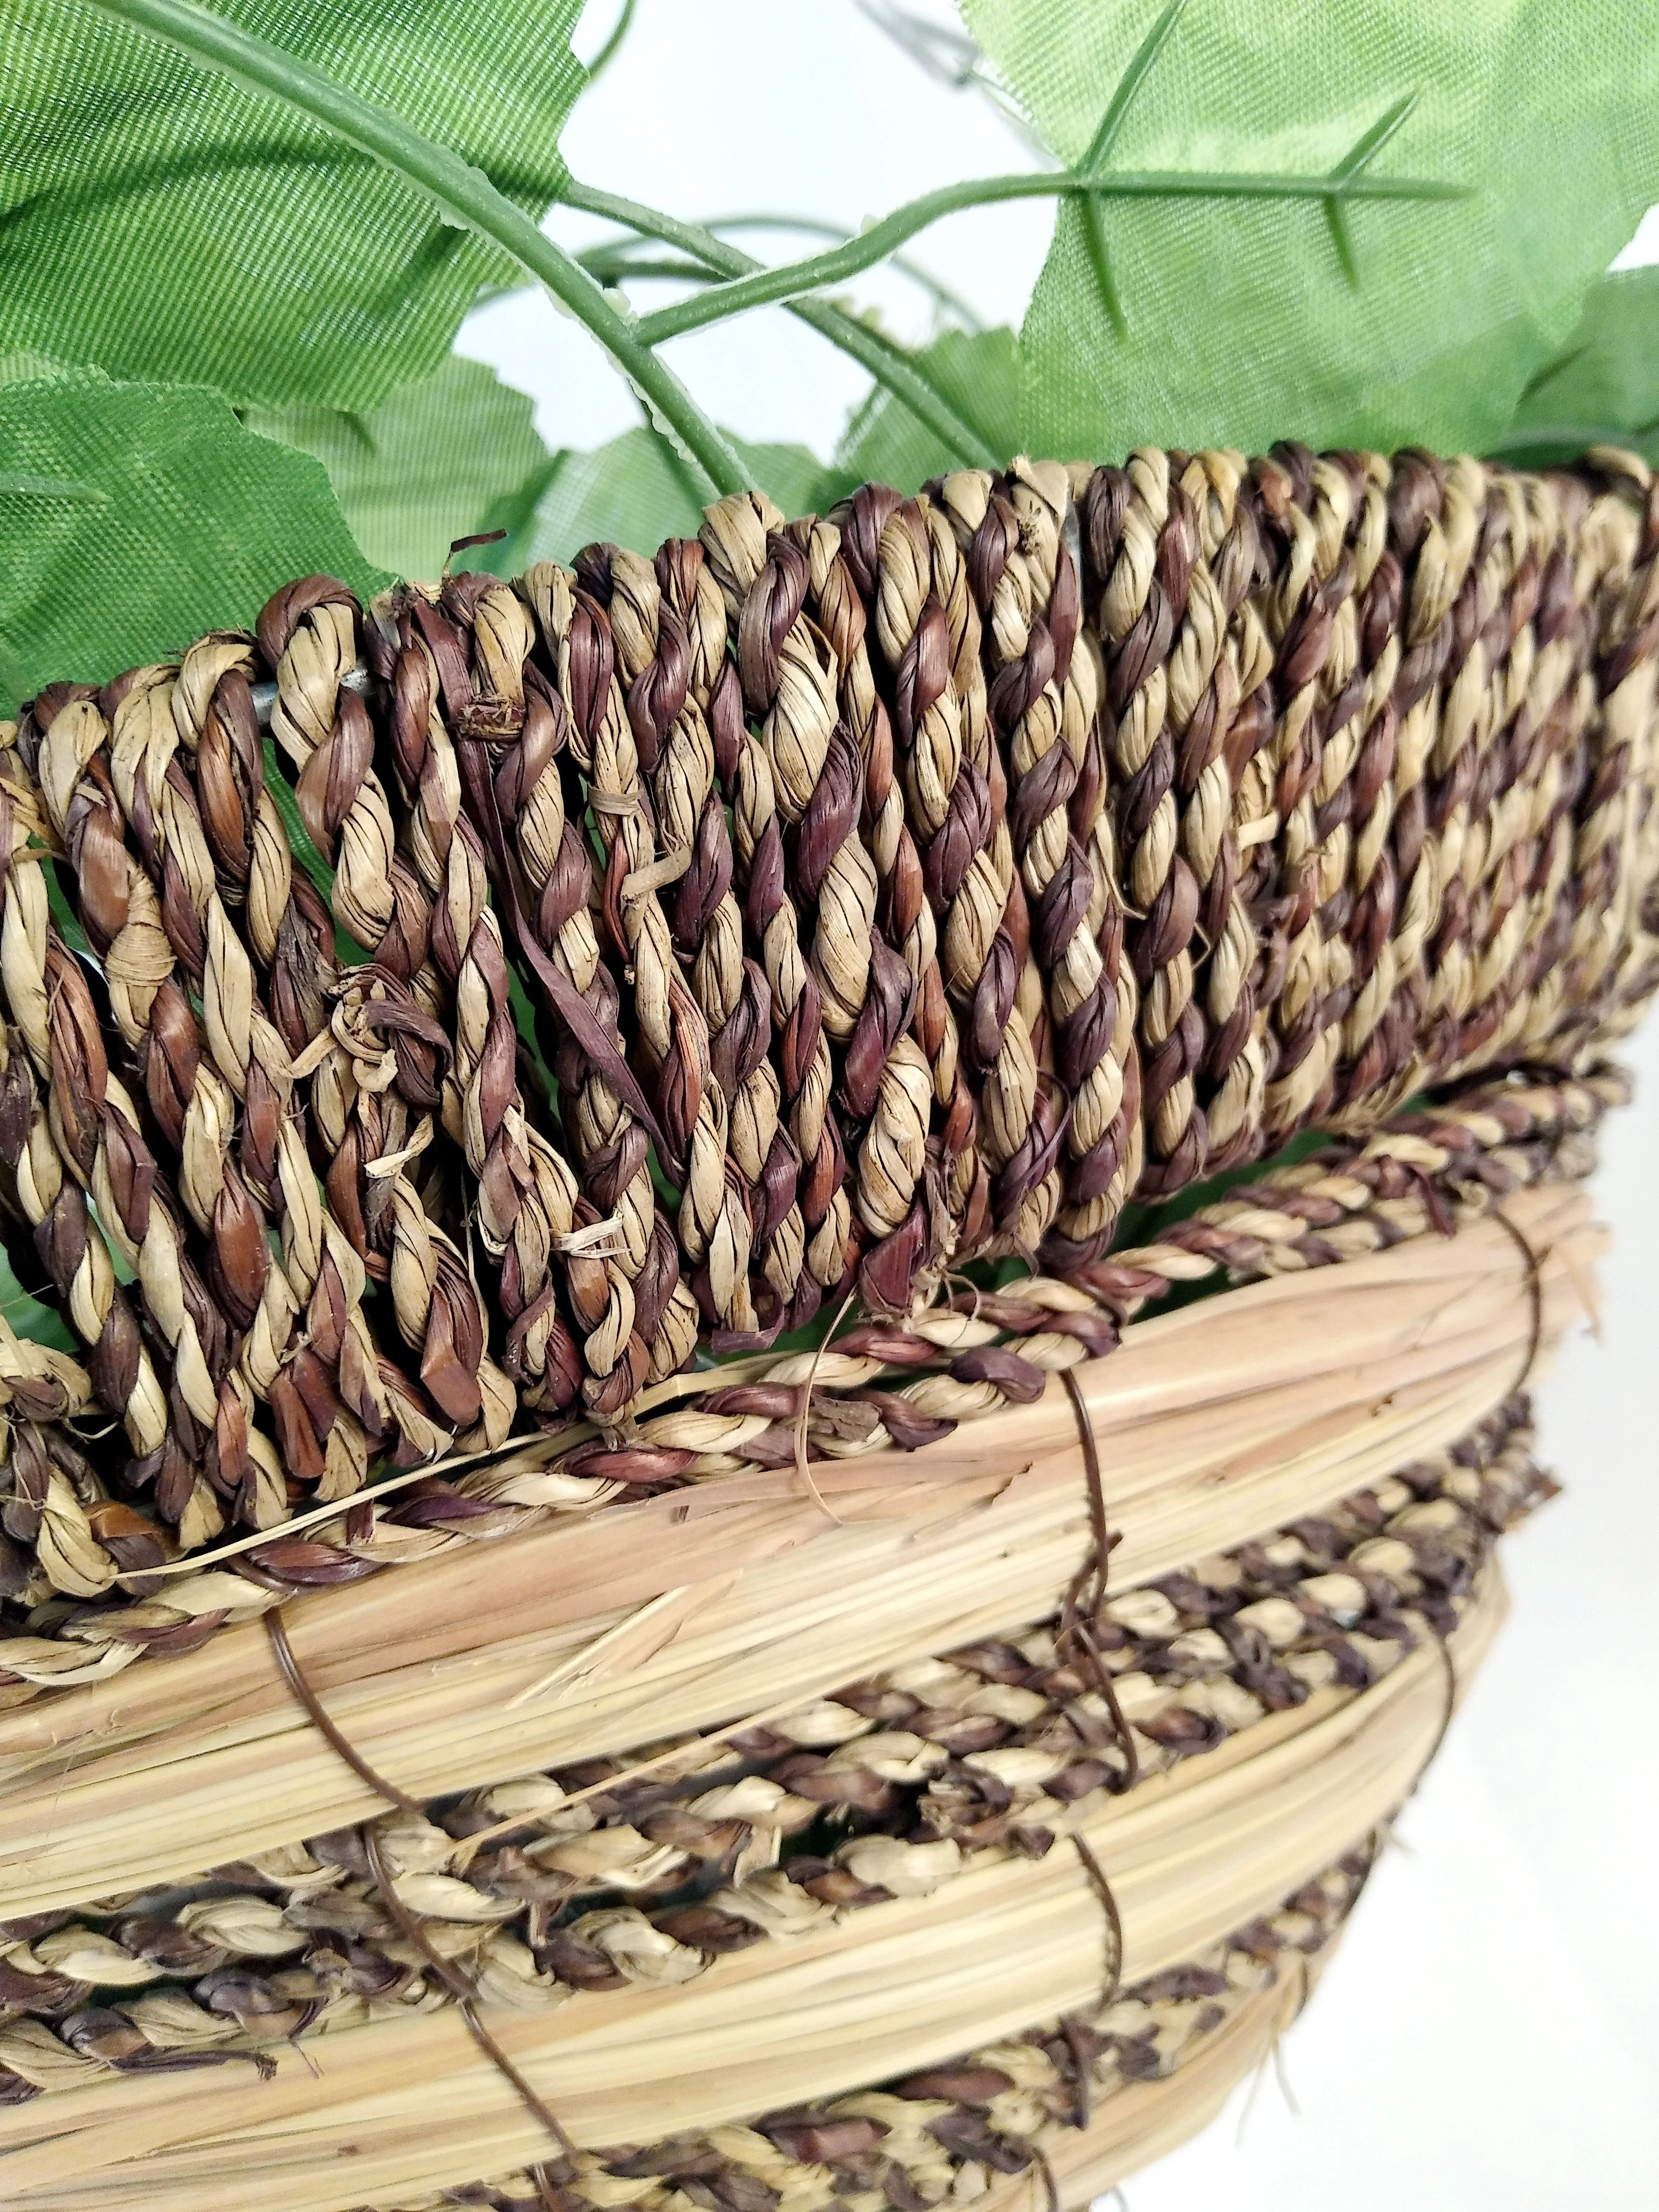 
Hot Sale Wholesale Handmade Woven Seagrass Hanging Basket Flower Pot for Garden Planter 